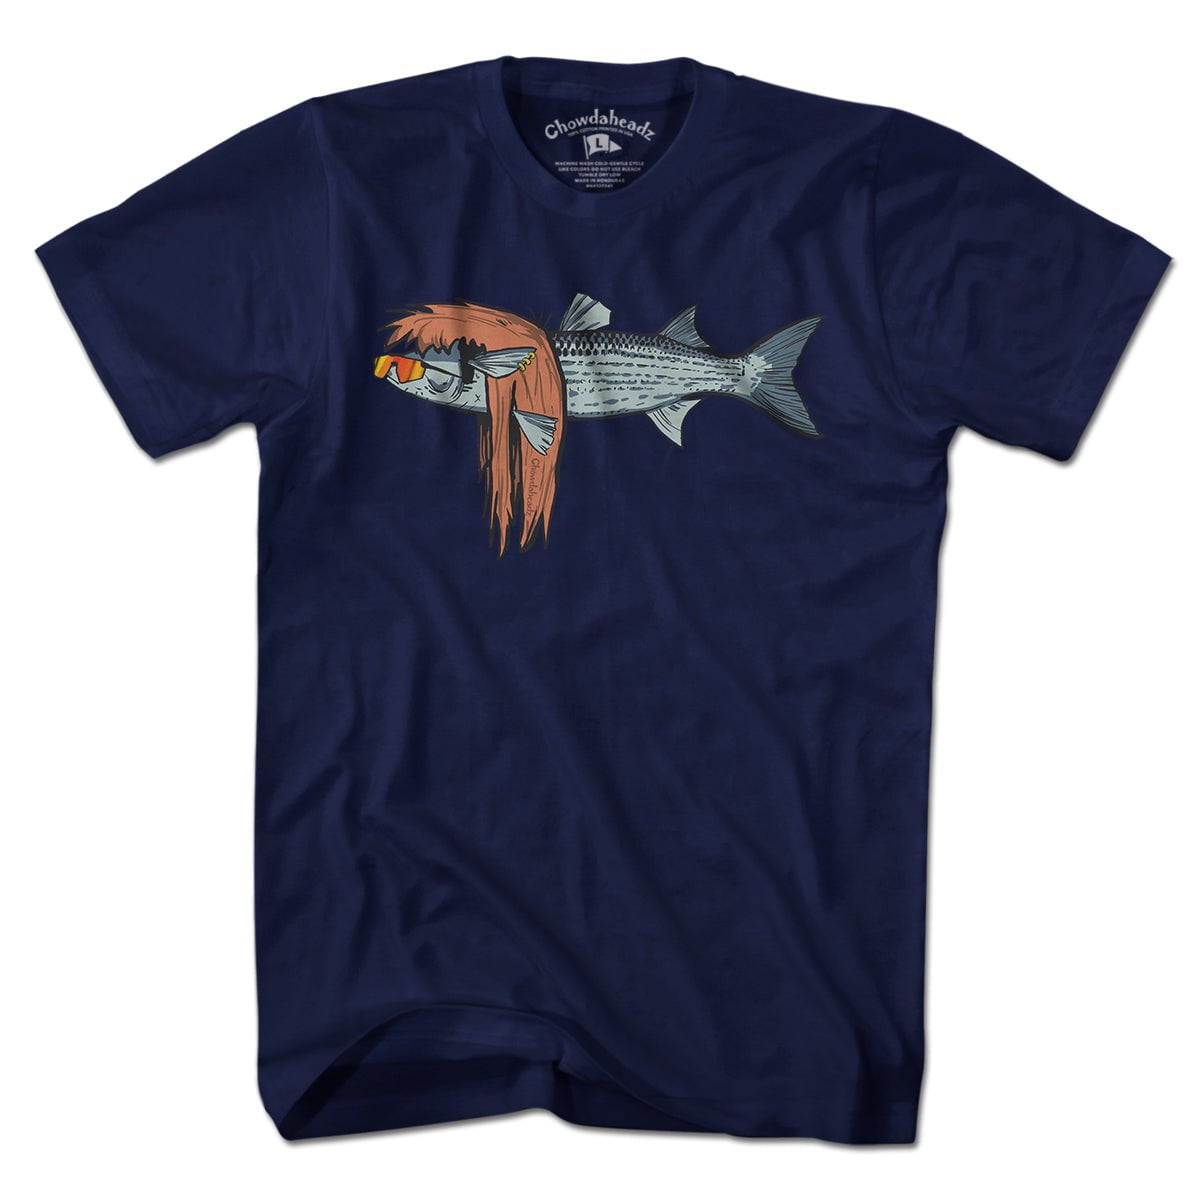 Funny Fishing Humor Shirts That Fish Was So Big Long Sleeve T